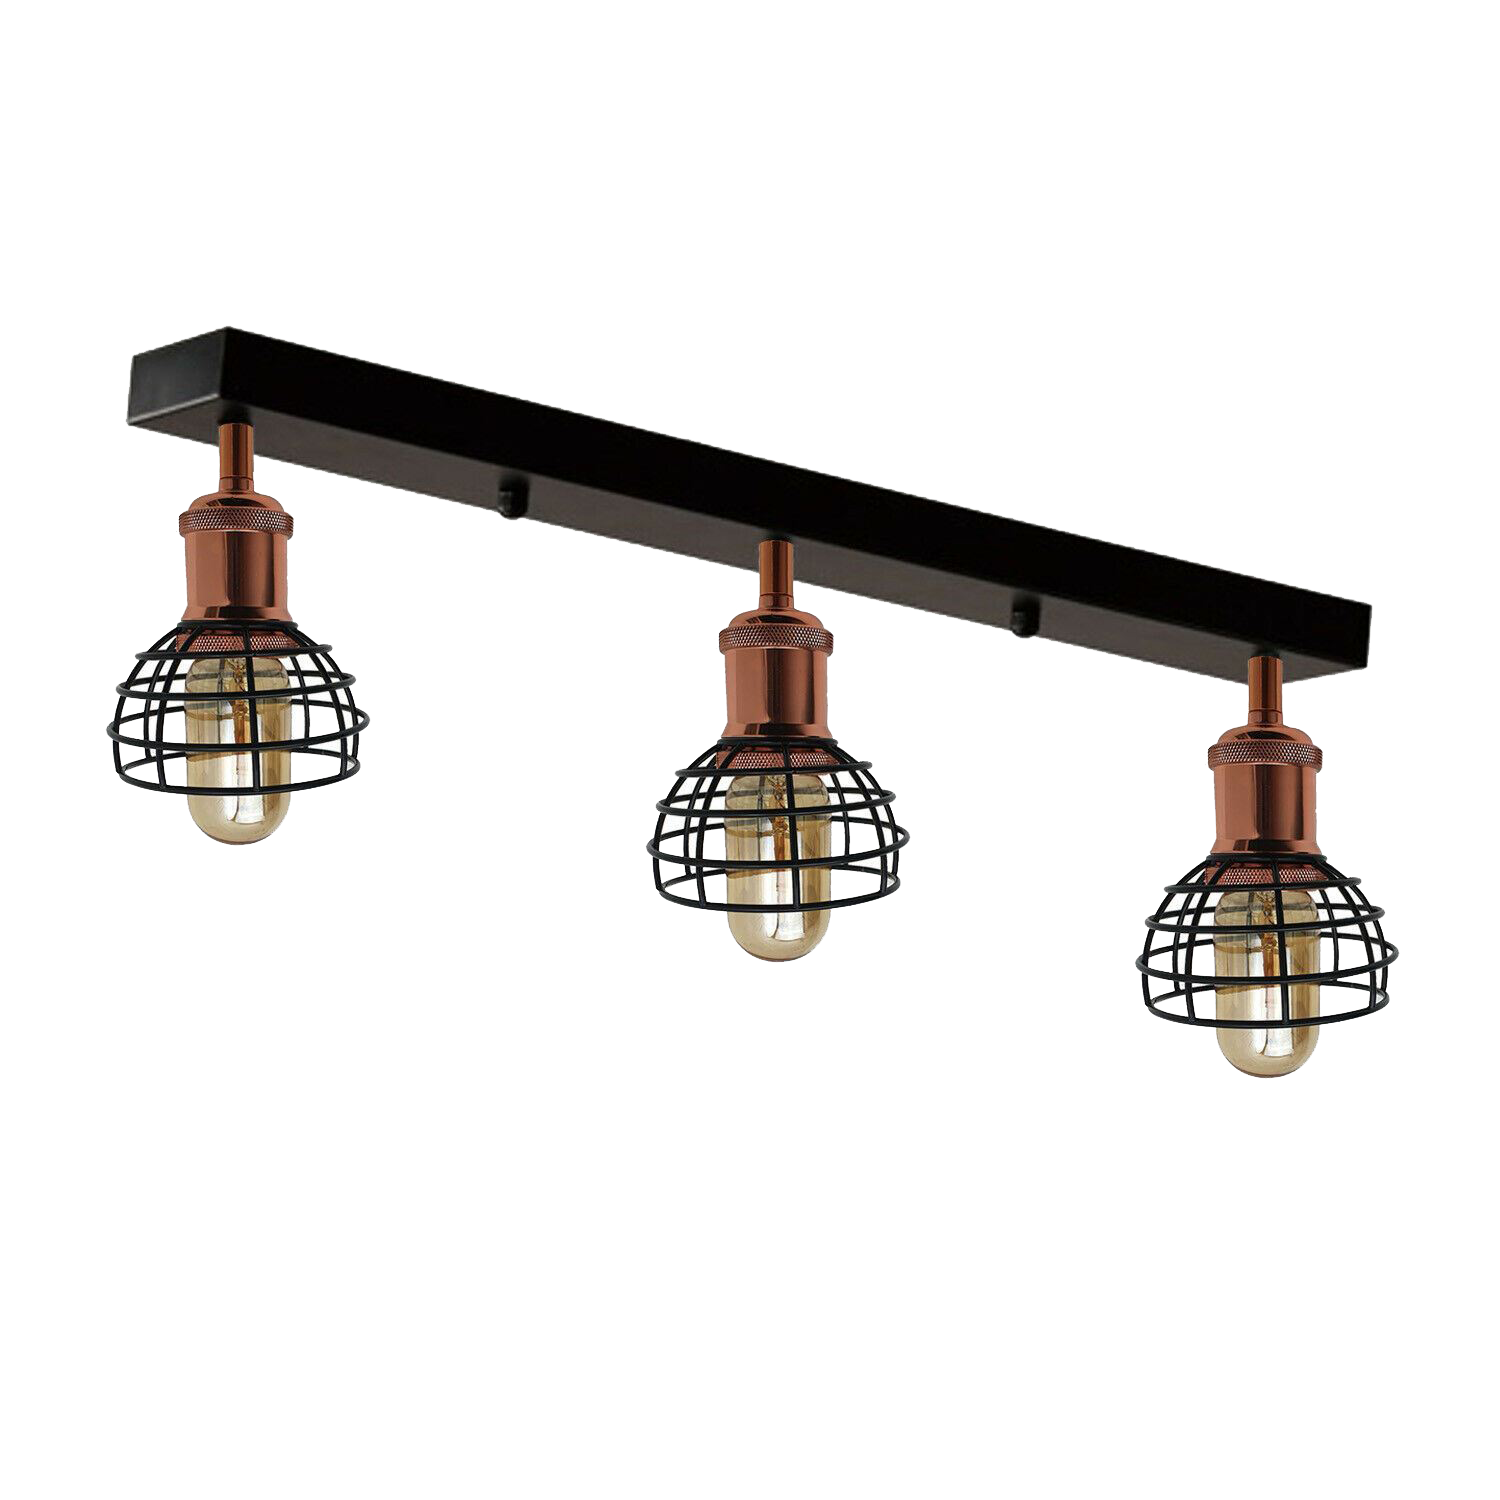 Industrial 3 Way Ceiling Light Fitting Indoor Ceiling Mount Light Black Metal Lamp Shade~1195 - LEDSone UK Ltd